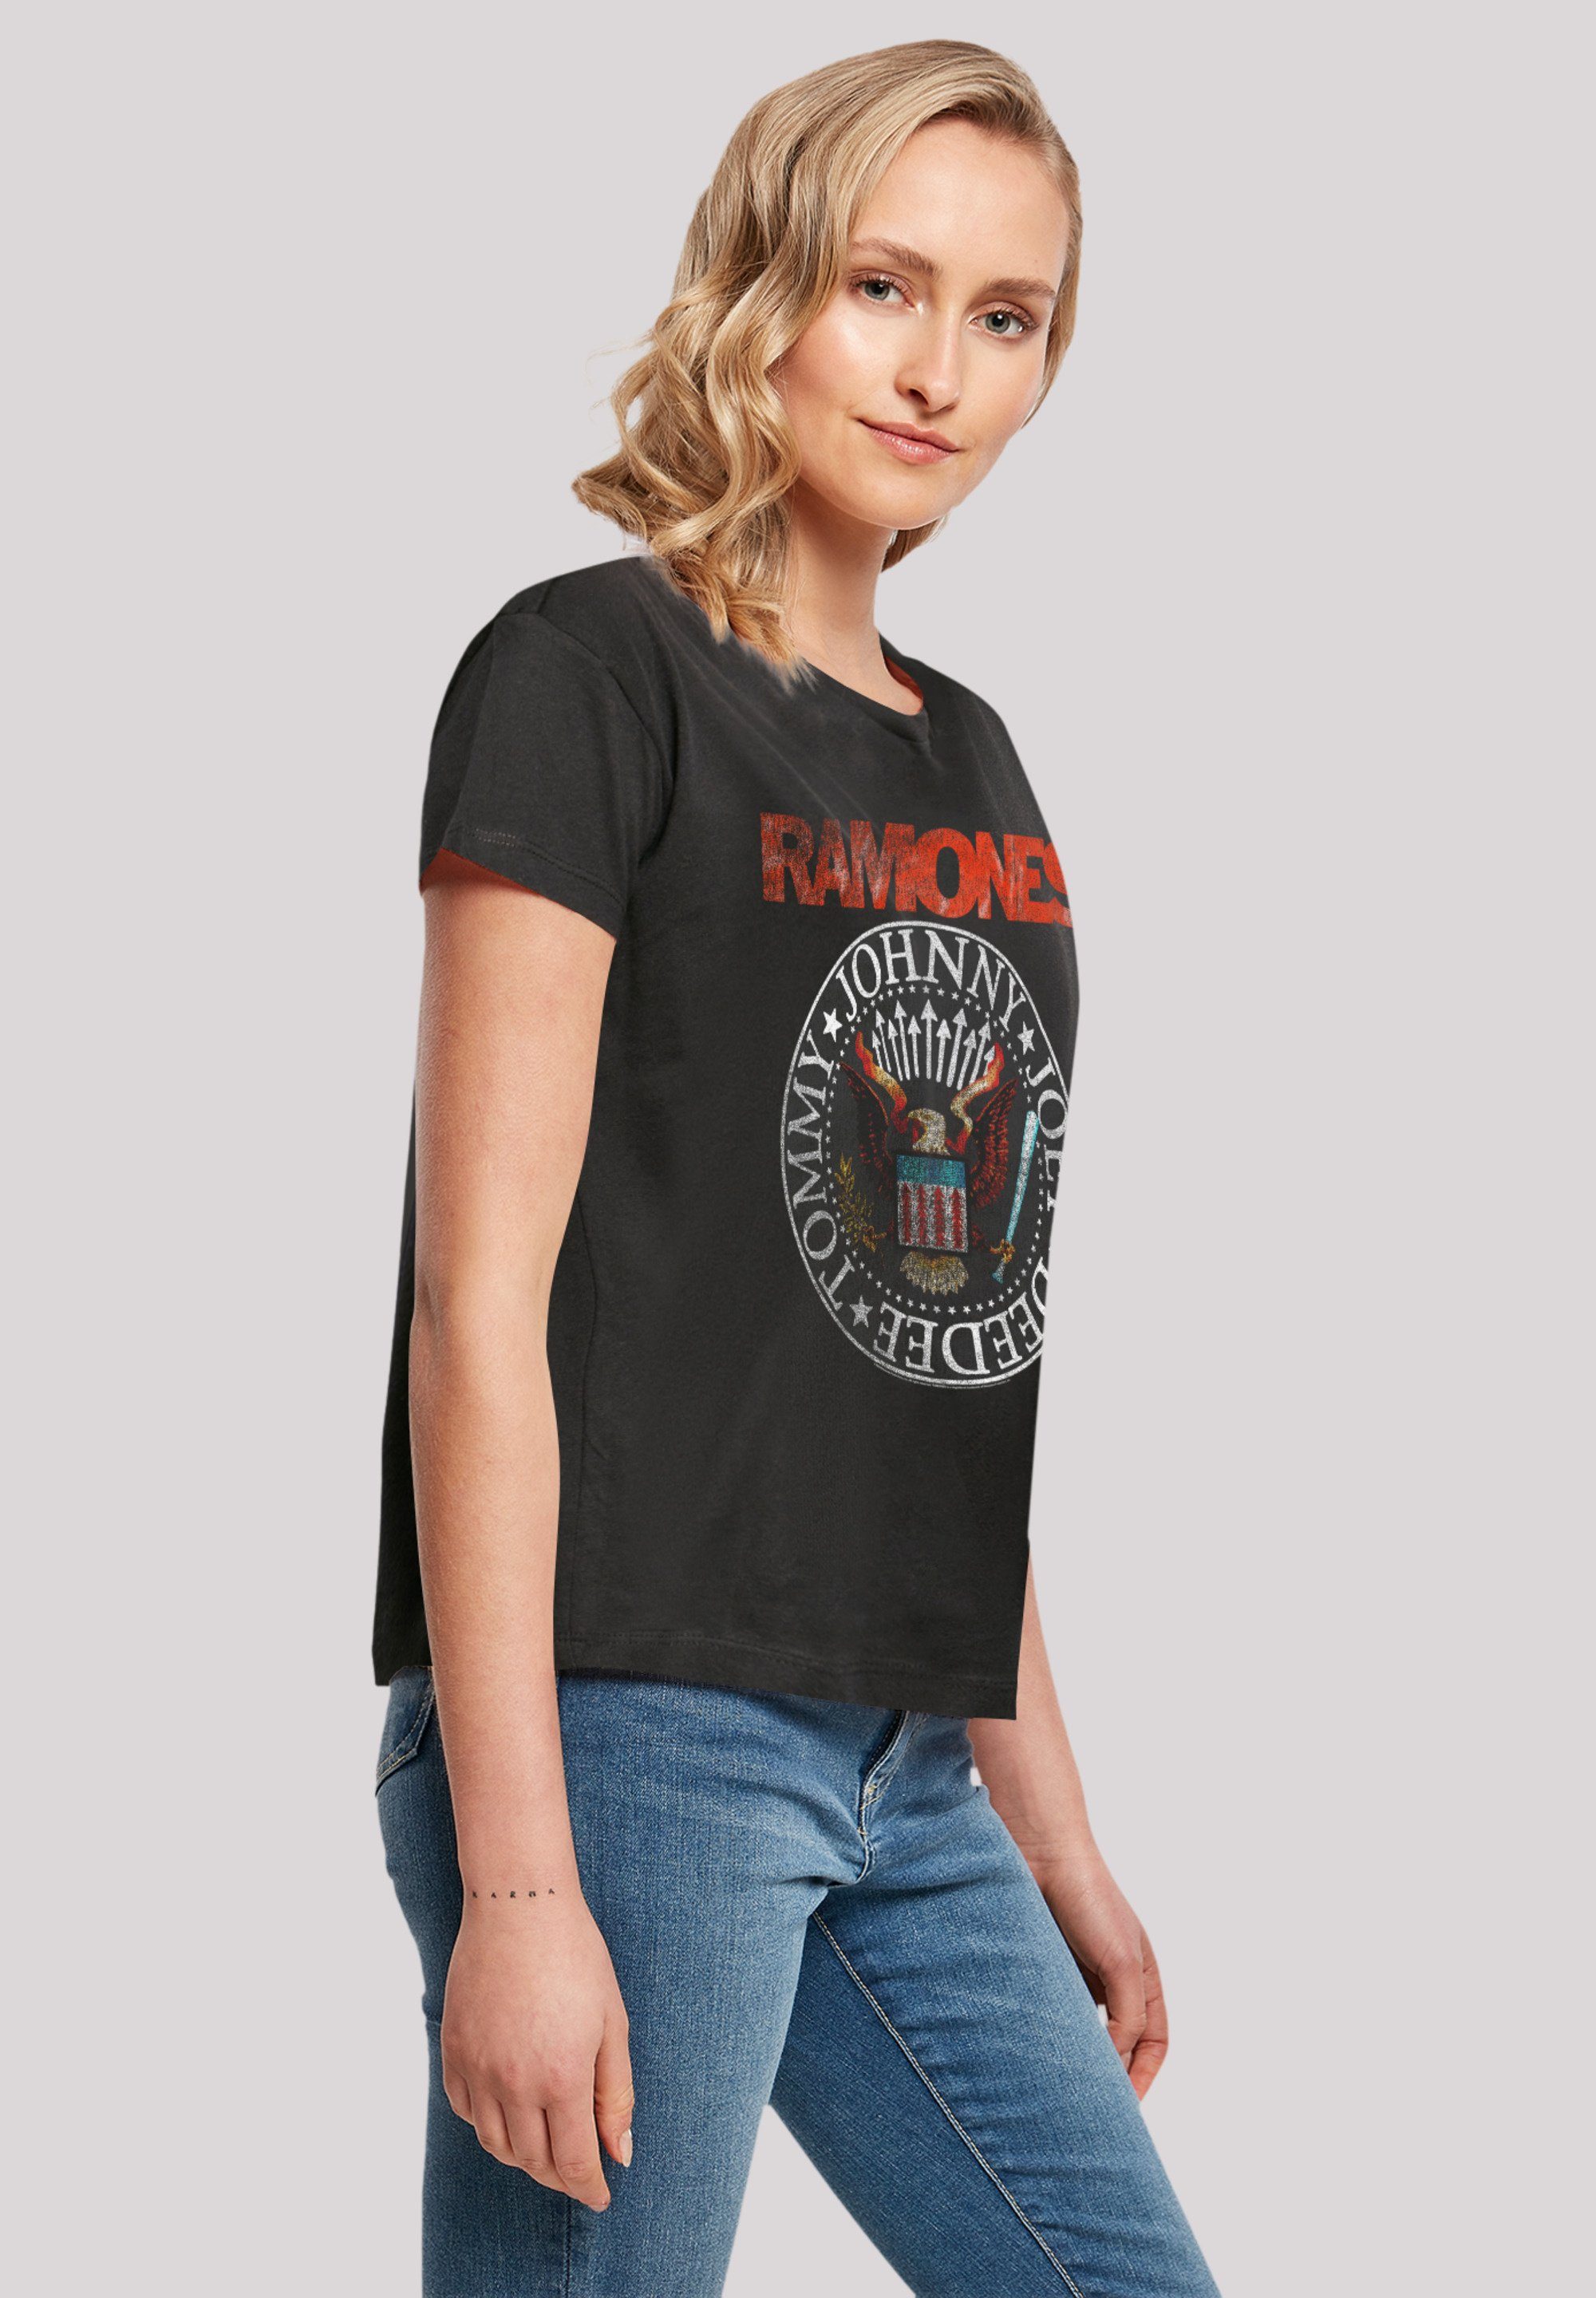 F4NT4STIC T-Shirt Ramones Rock Musik VINTAGE Band, SEAL Premium Qualität, Band EAGLE Rock-Musik